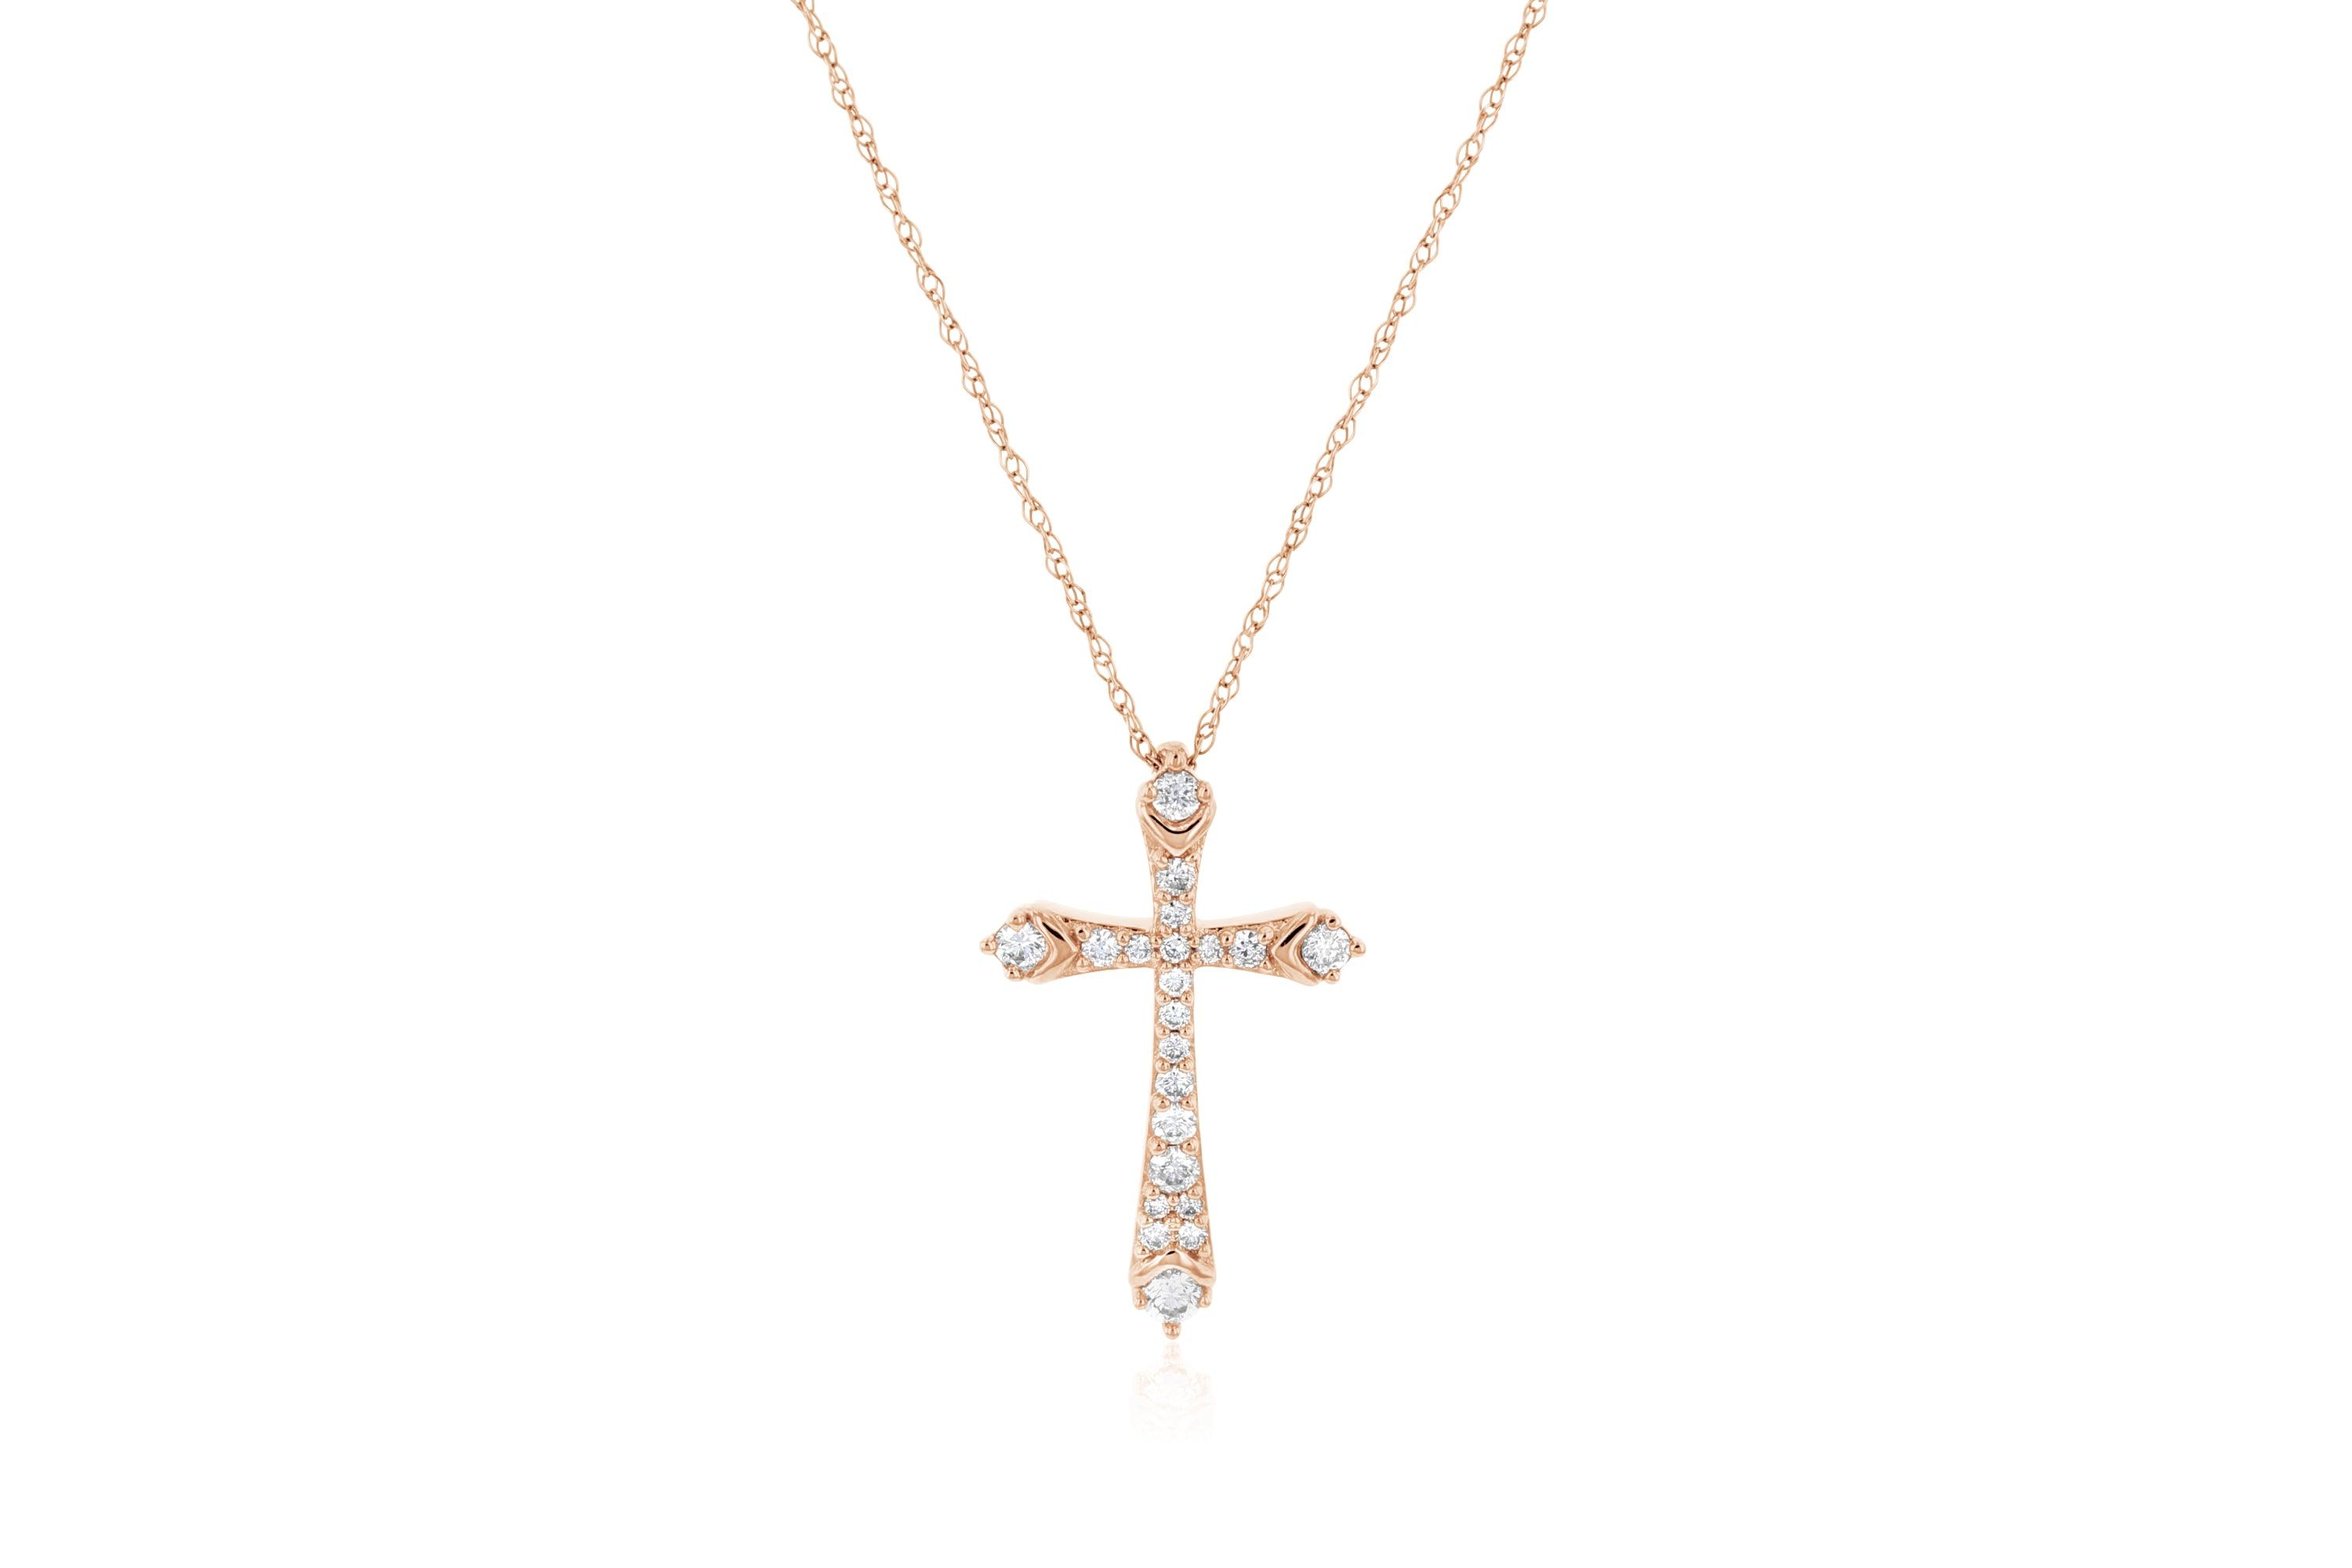 Graduated Diamond Cross Pendant Necklace - The Brothers Jewelry Co.